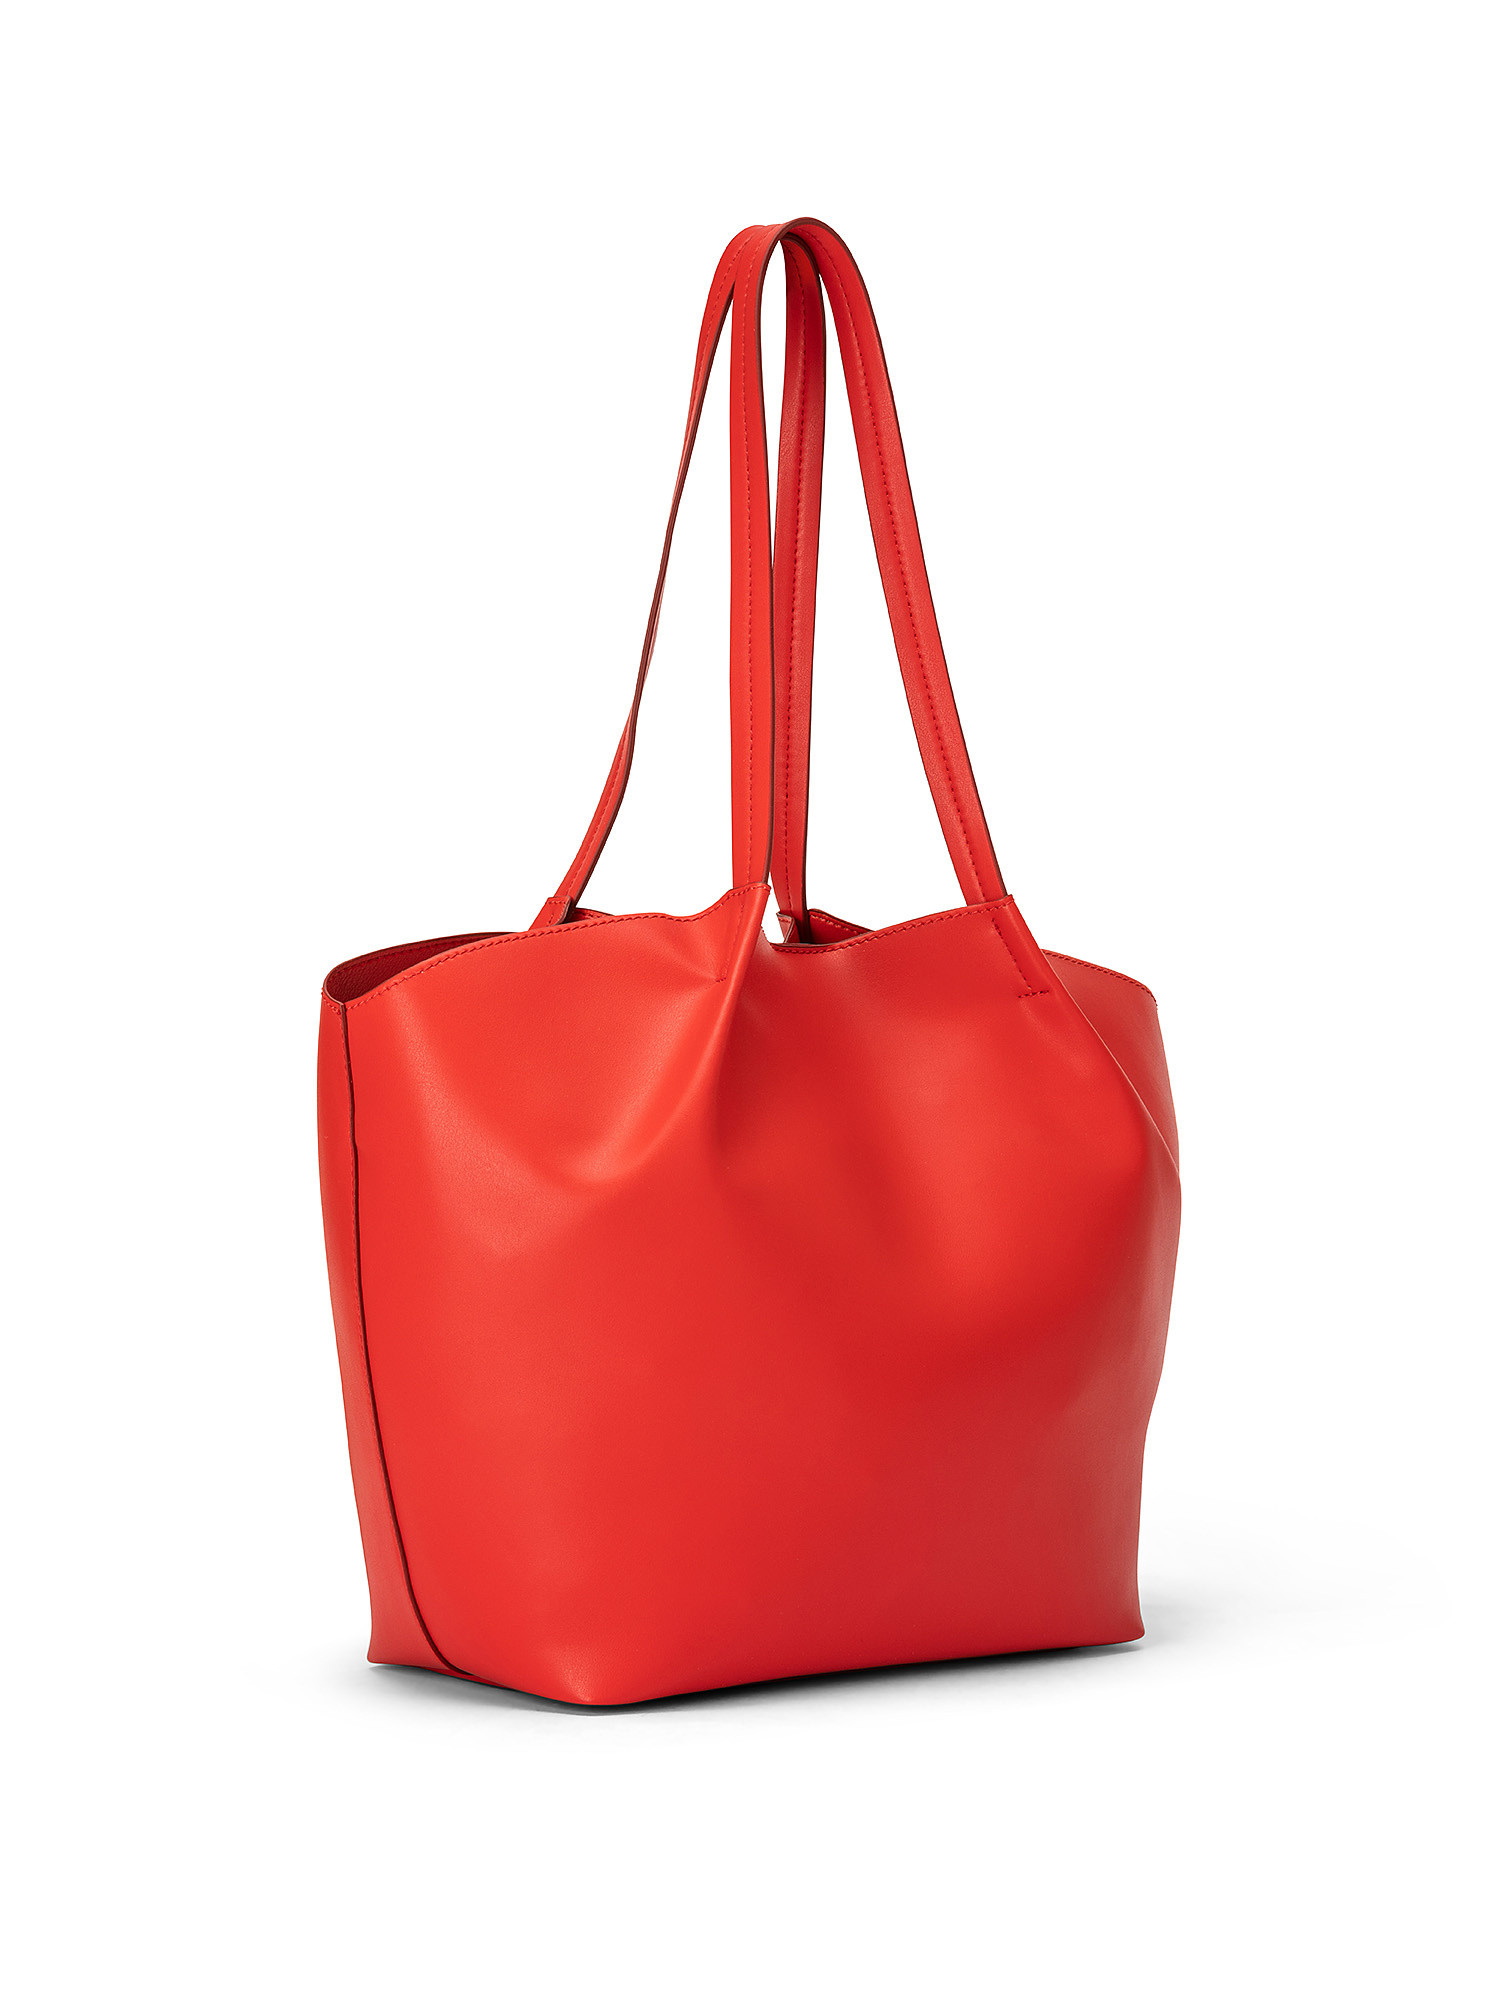 Tote bag, Red, large image number 1